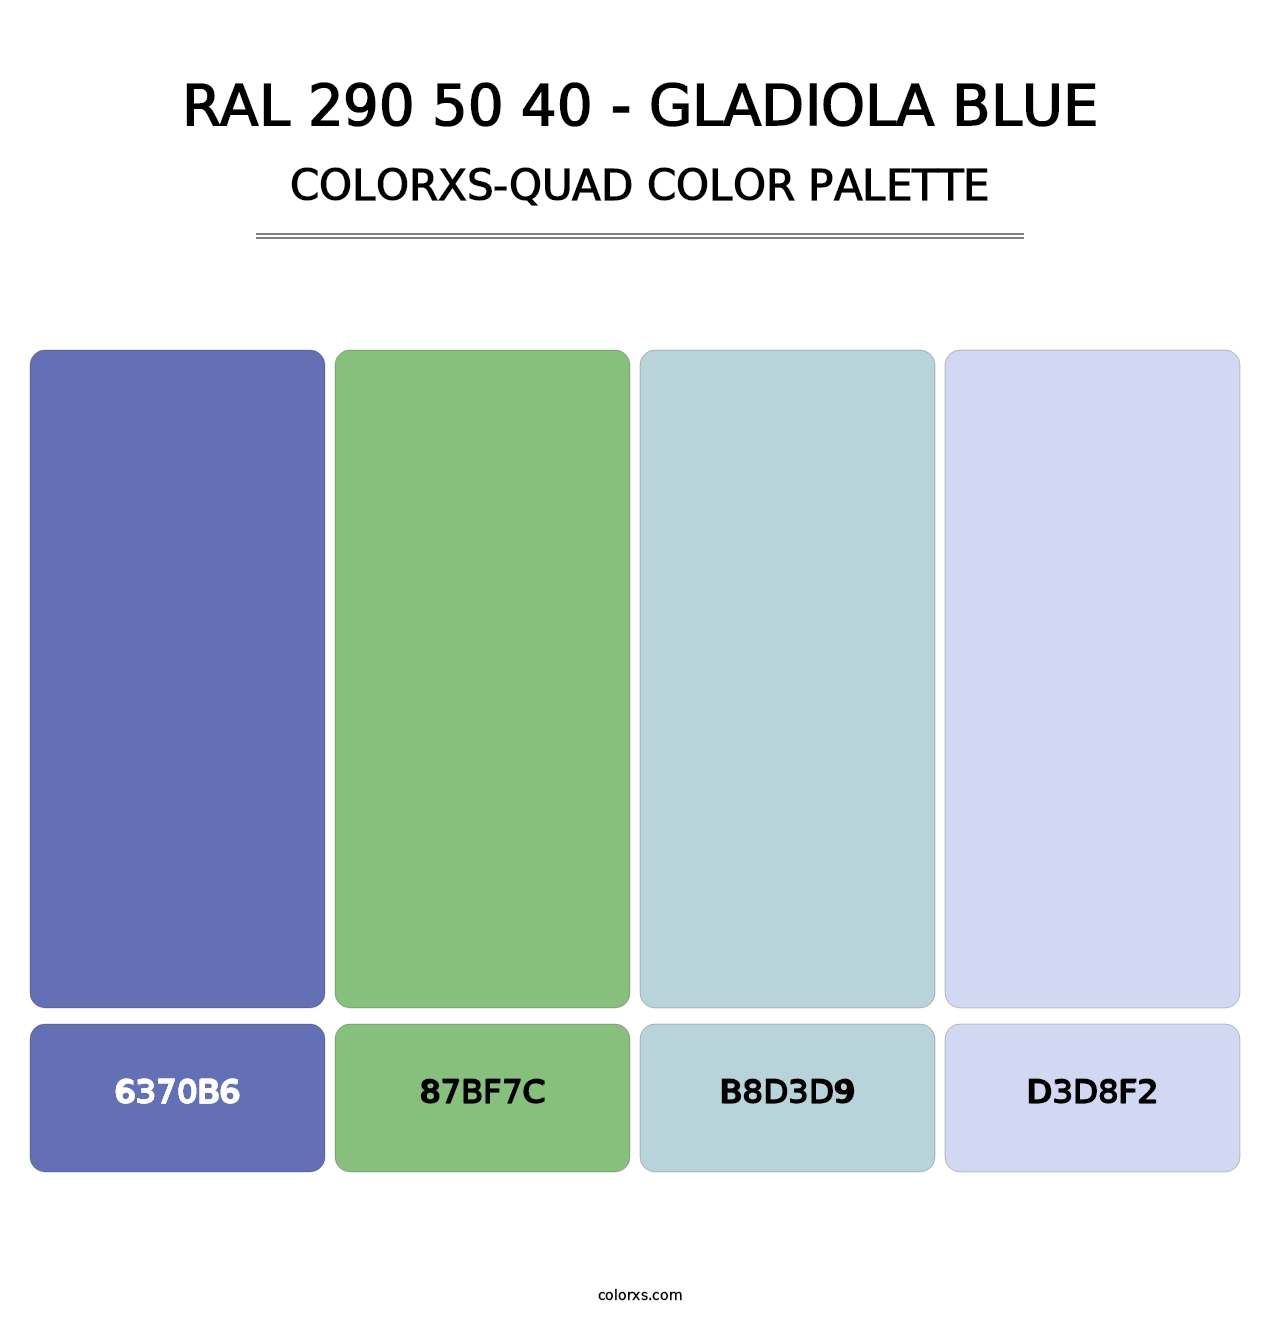 RAL 290 50 40 - Gladiola Blue - Colorxs Quad Palette